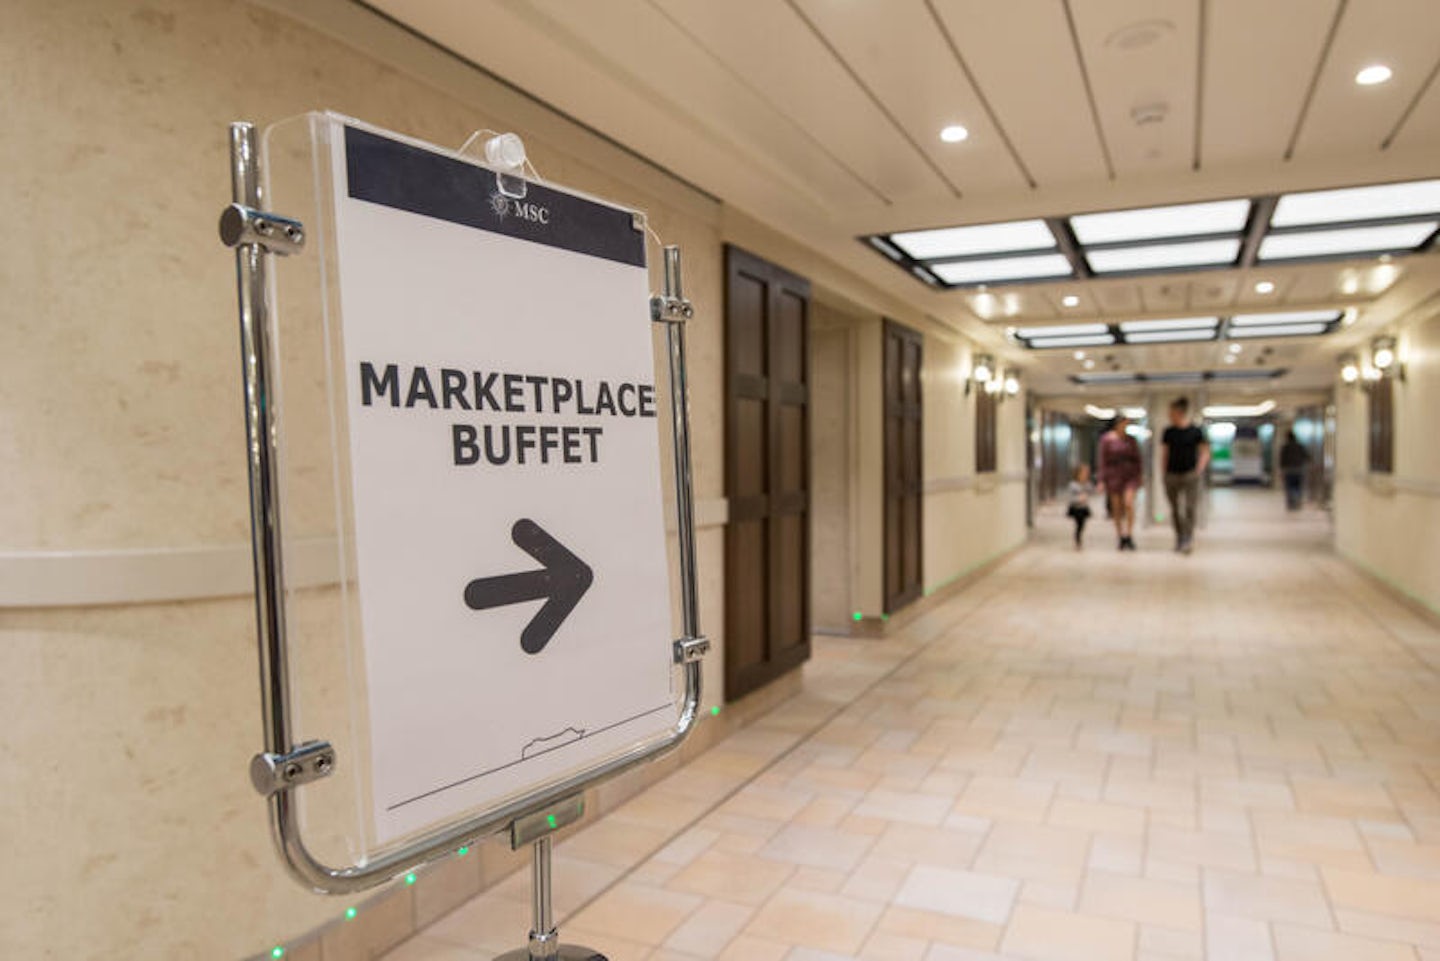 Marketplace Buffet on MSC Meraviglia